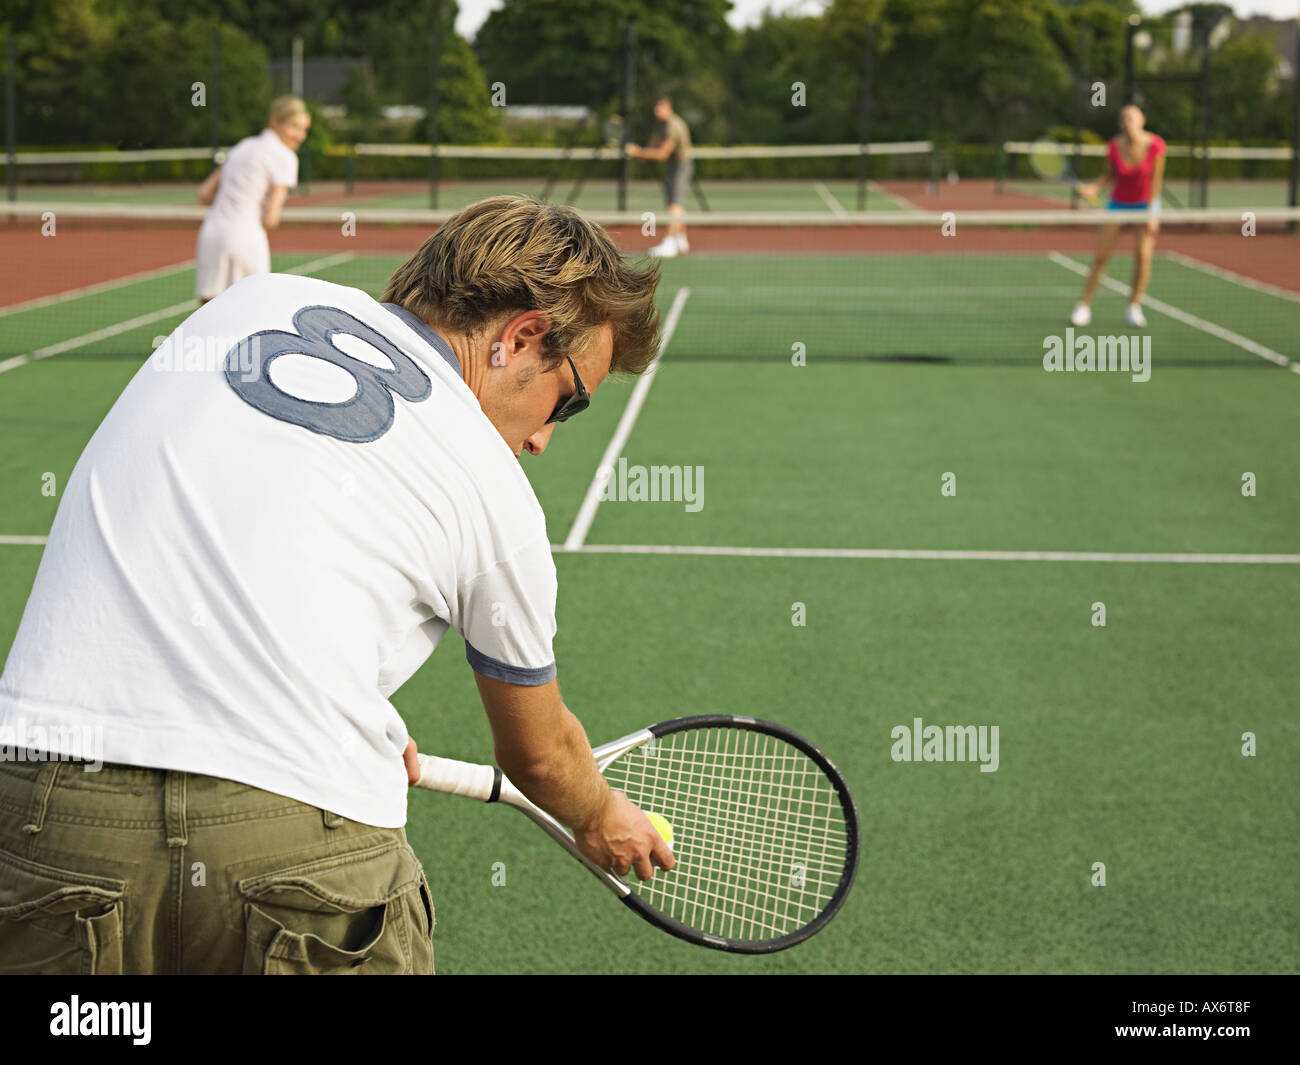 People playing tennis Stock Photo